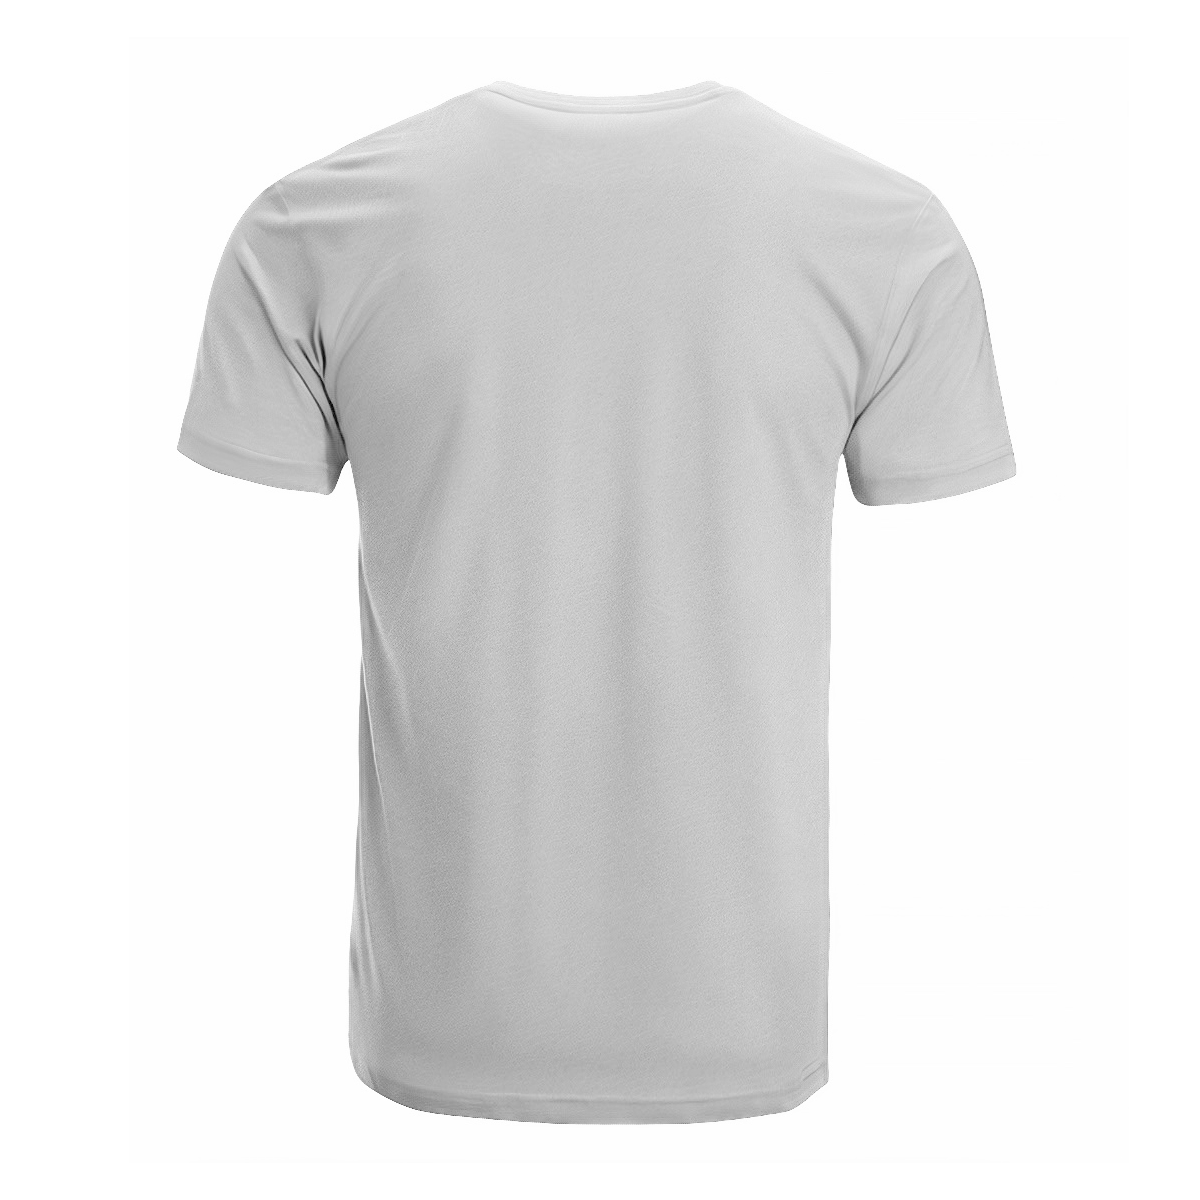 Don Tartan Crest T-shirt - I'm not yelling style